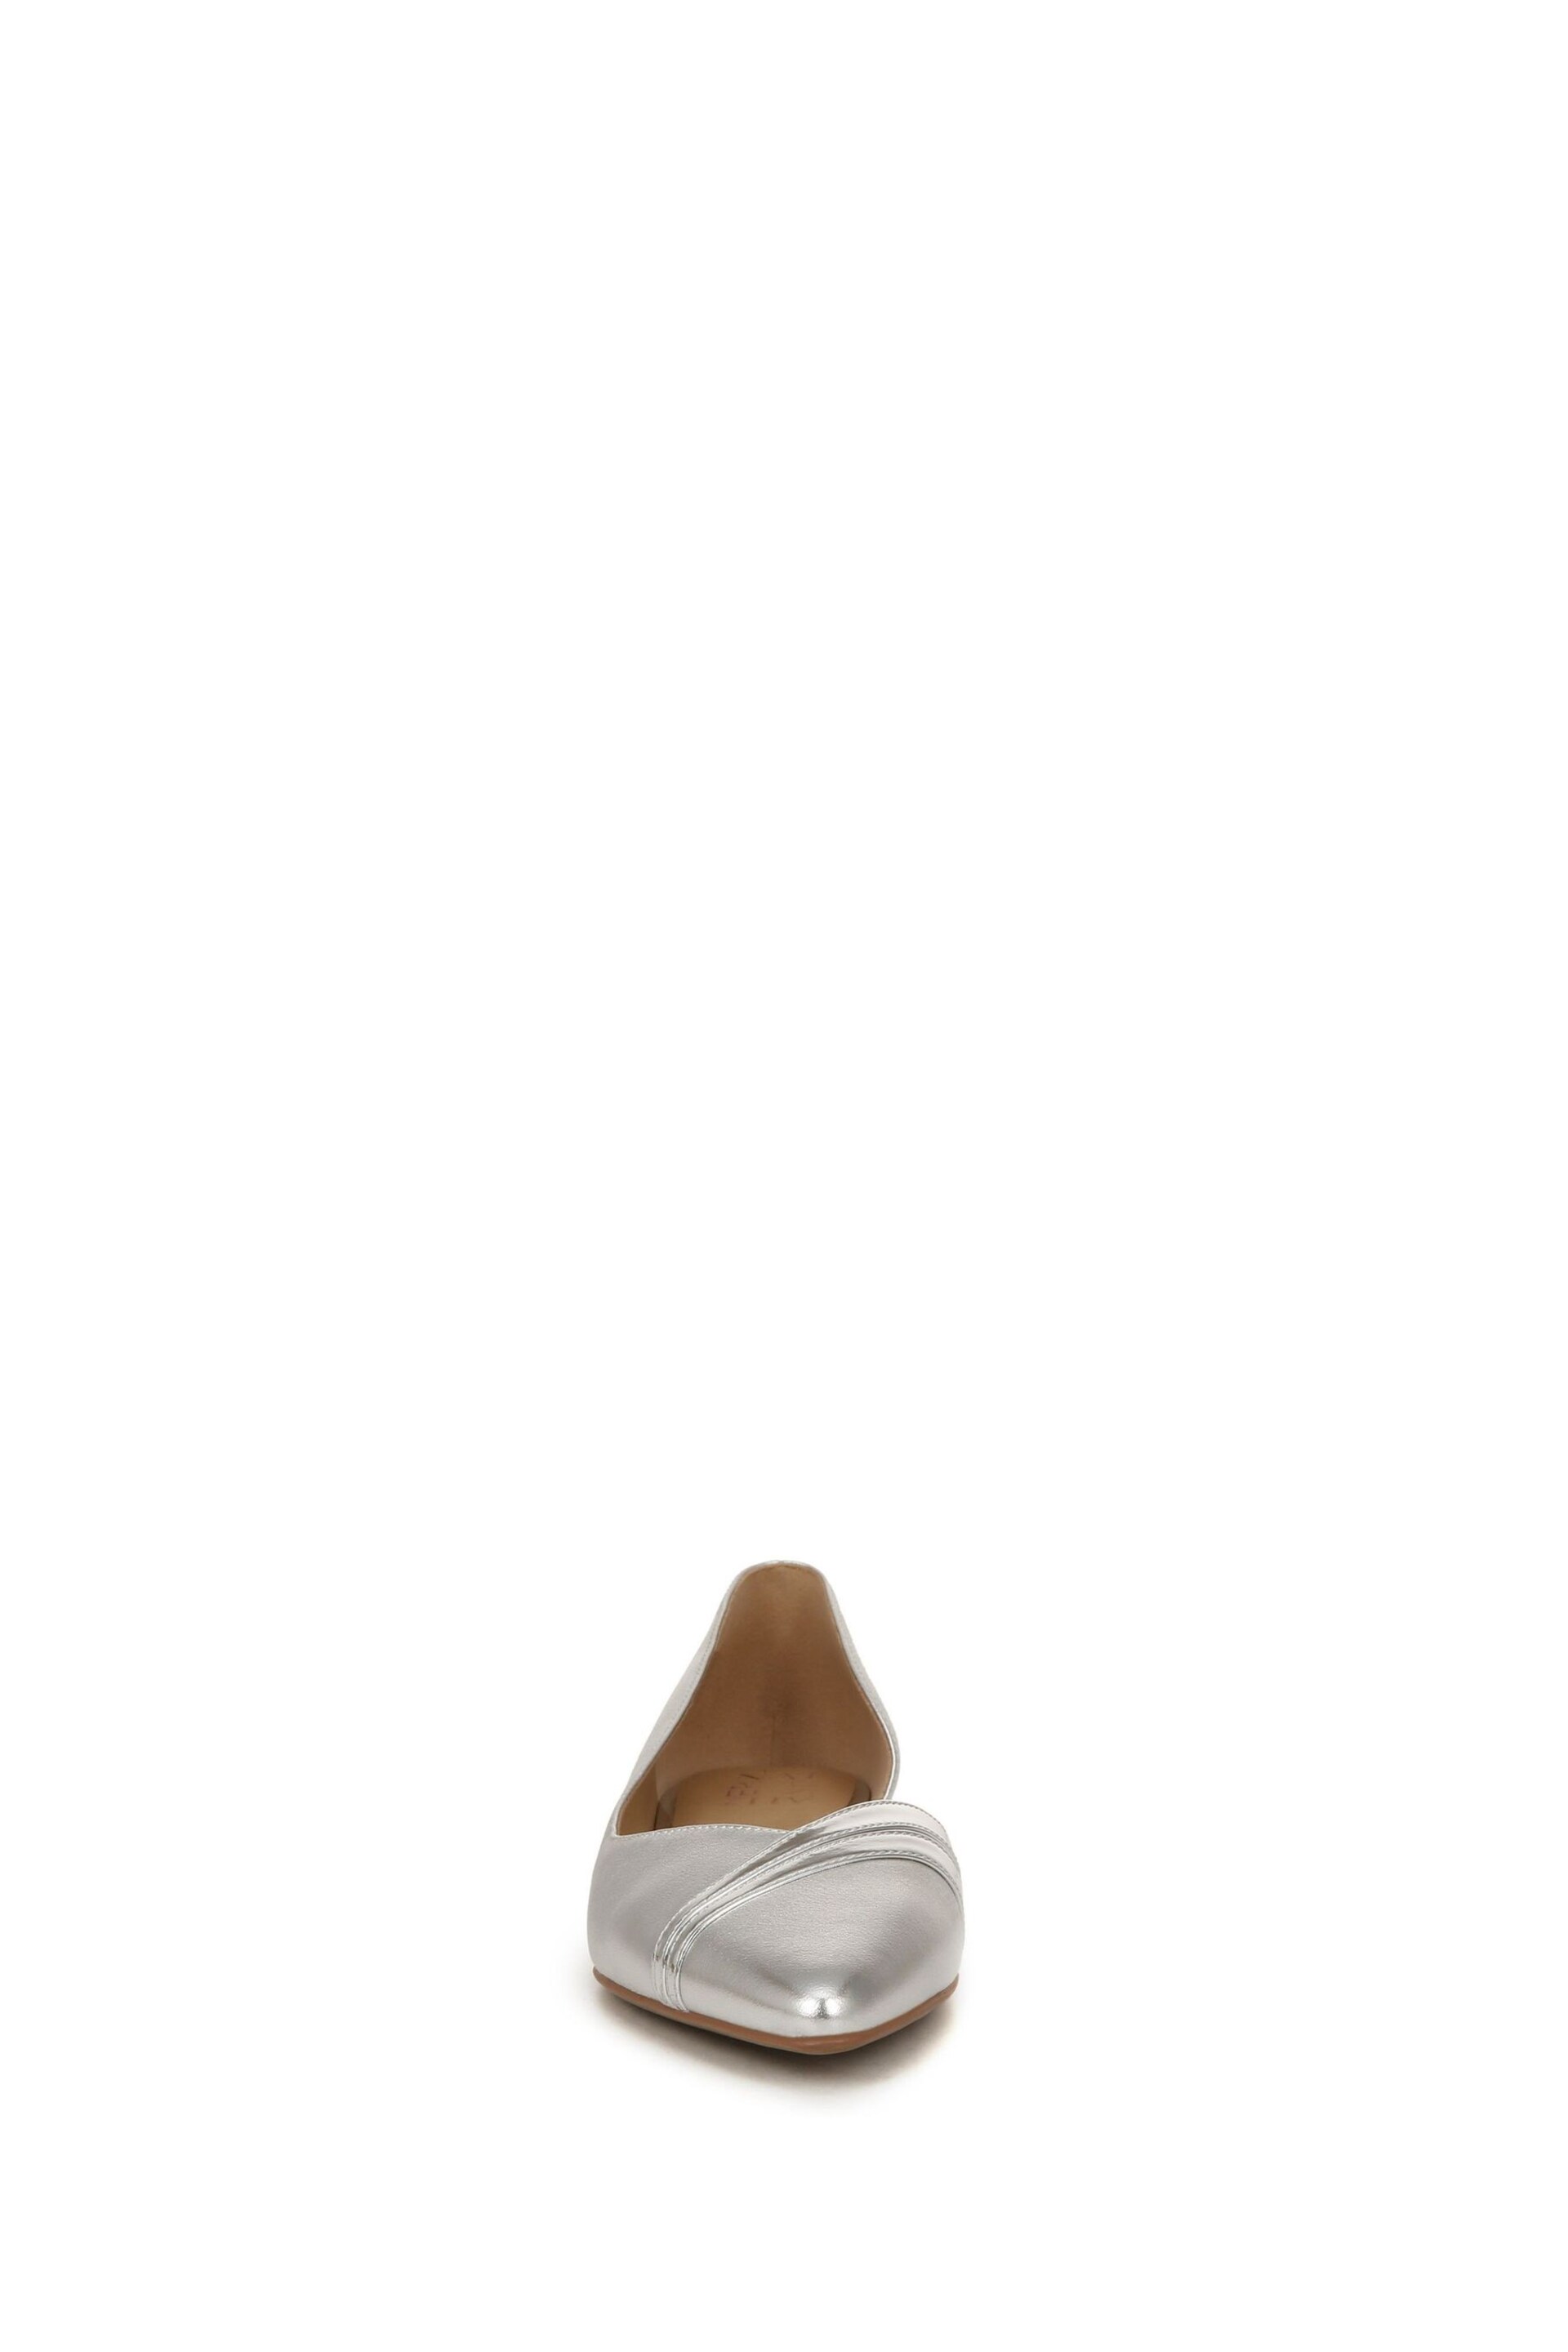 Naturalizer Henrietta Ballerina Shoes - Image 4 of 7